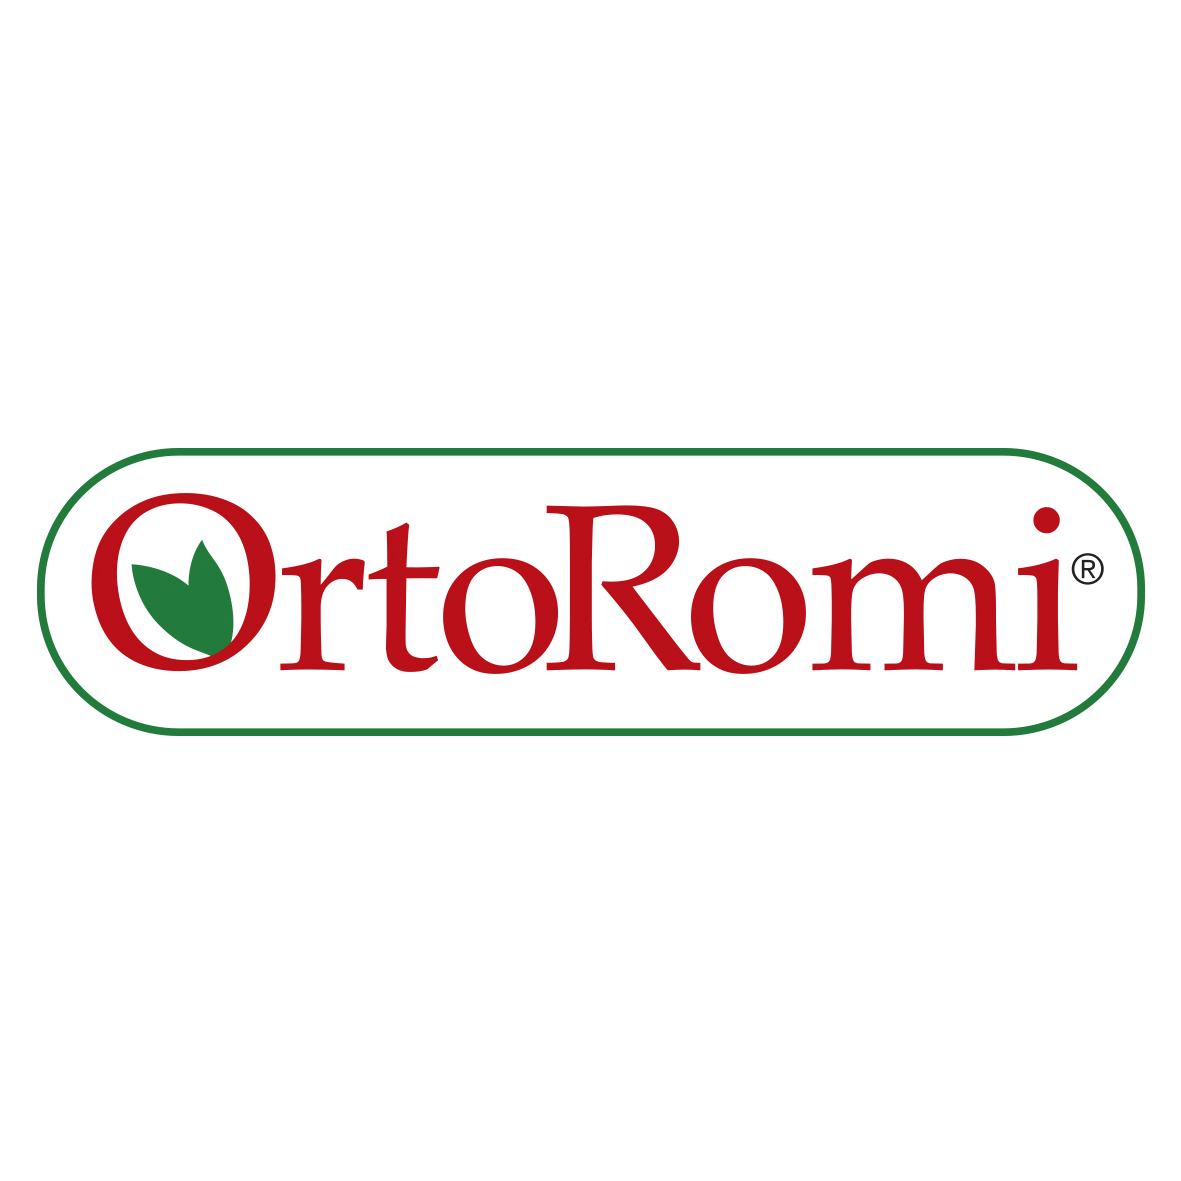 ortoromi_logo